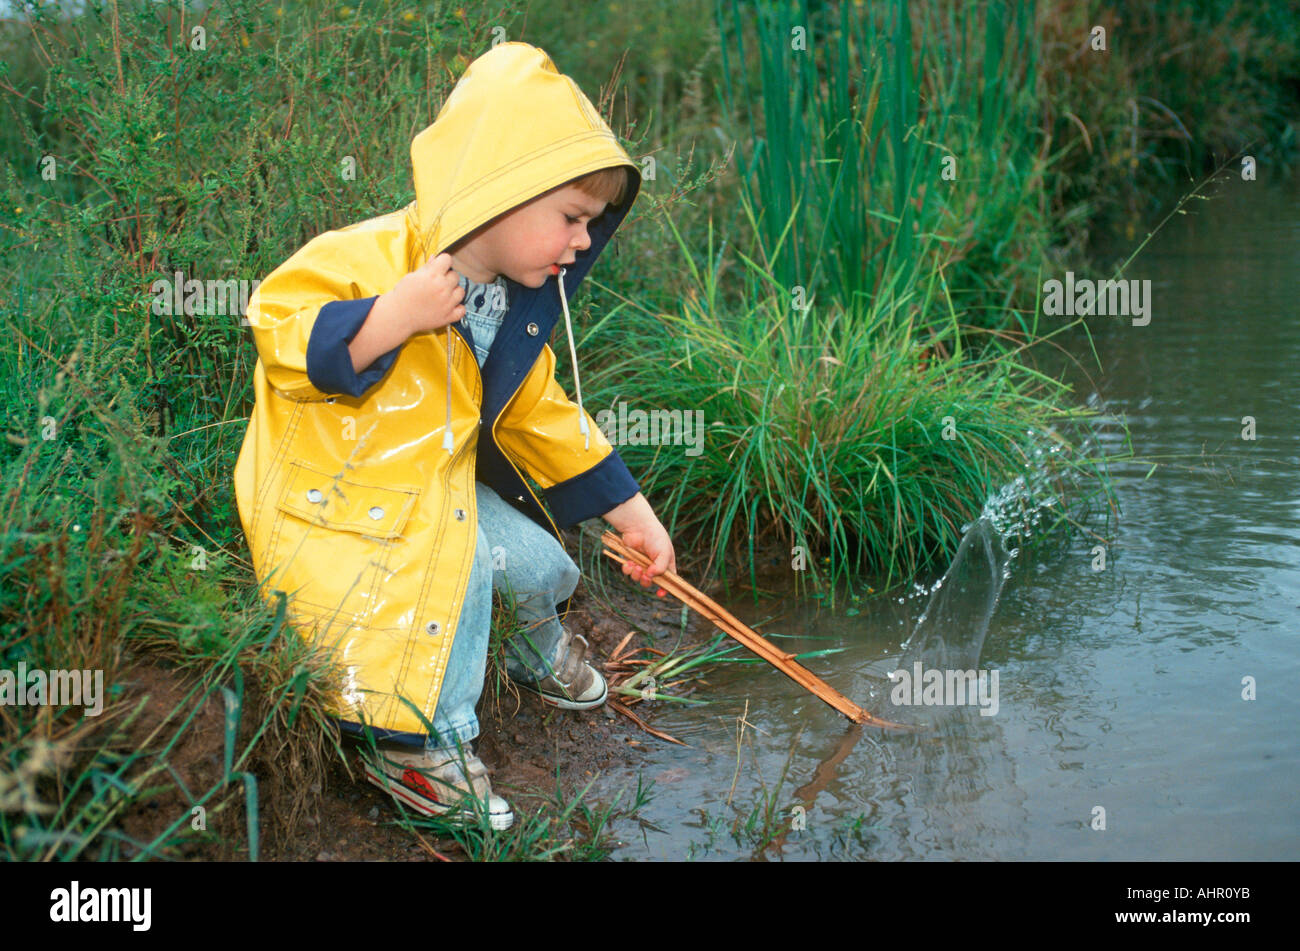 https://c8.alamy.com/comp/AHR0YB/little-boy-in-yellow-raincoat-playing-at-edge-of-a-stream-AHR0YB.jpg